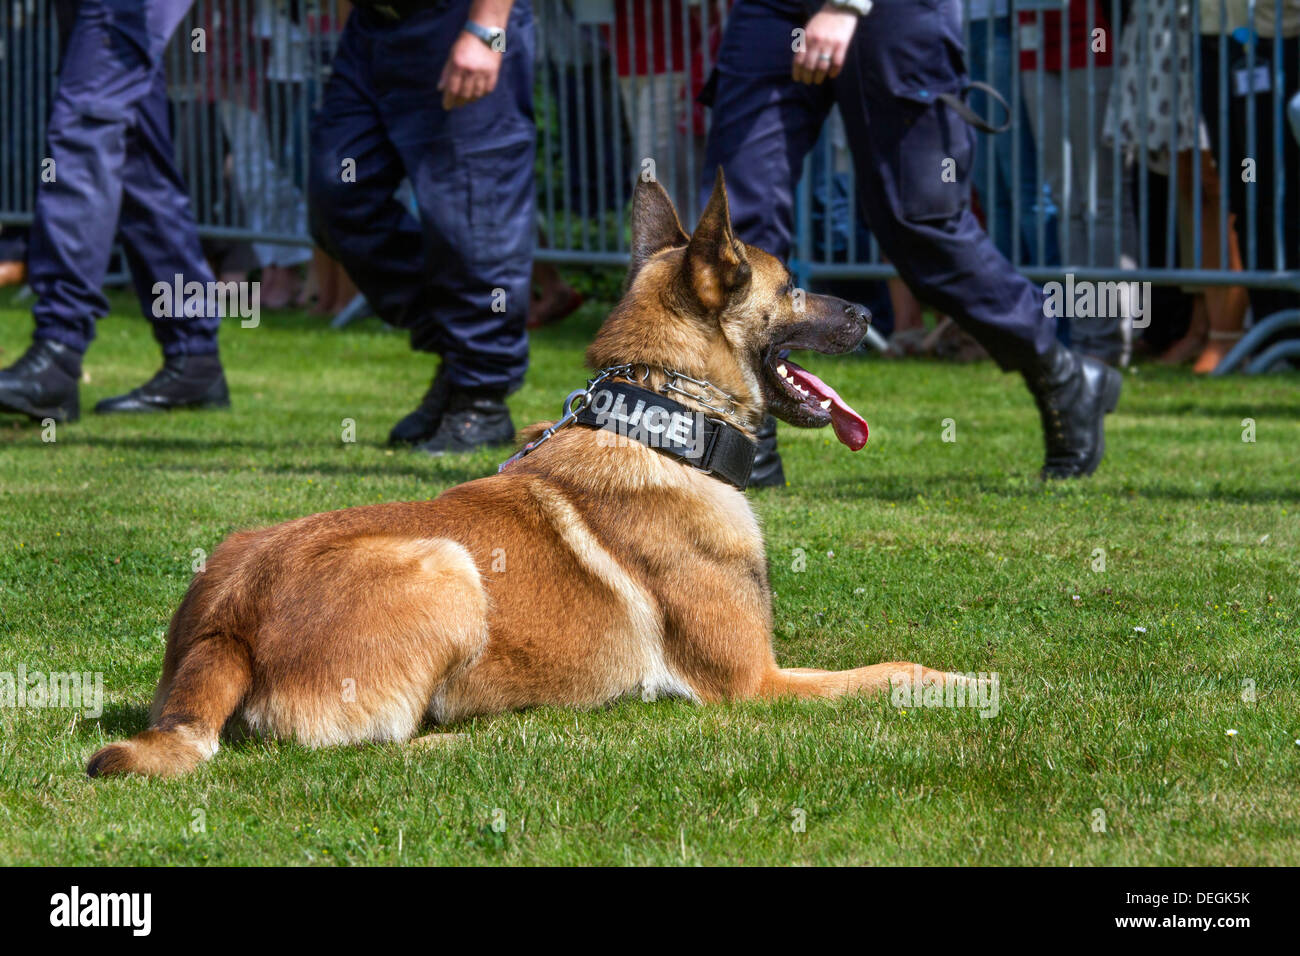 Belgian shepherd dog / Malinois working as police dog wearing collar Stock  Photo - Alamy